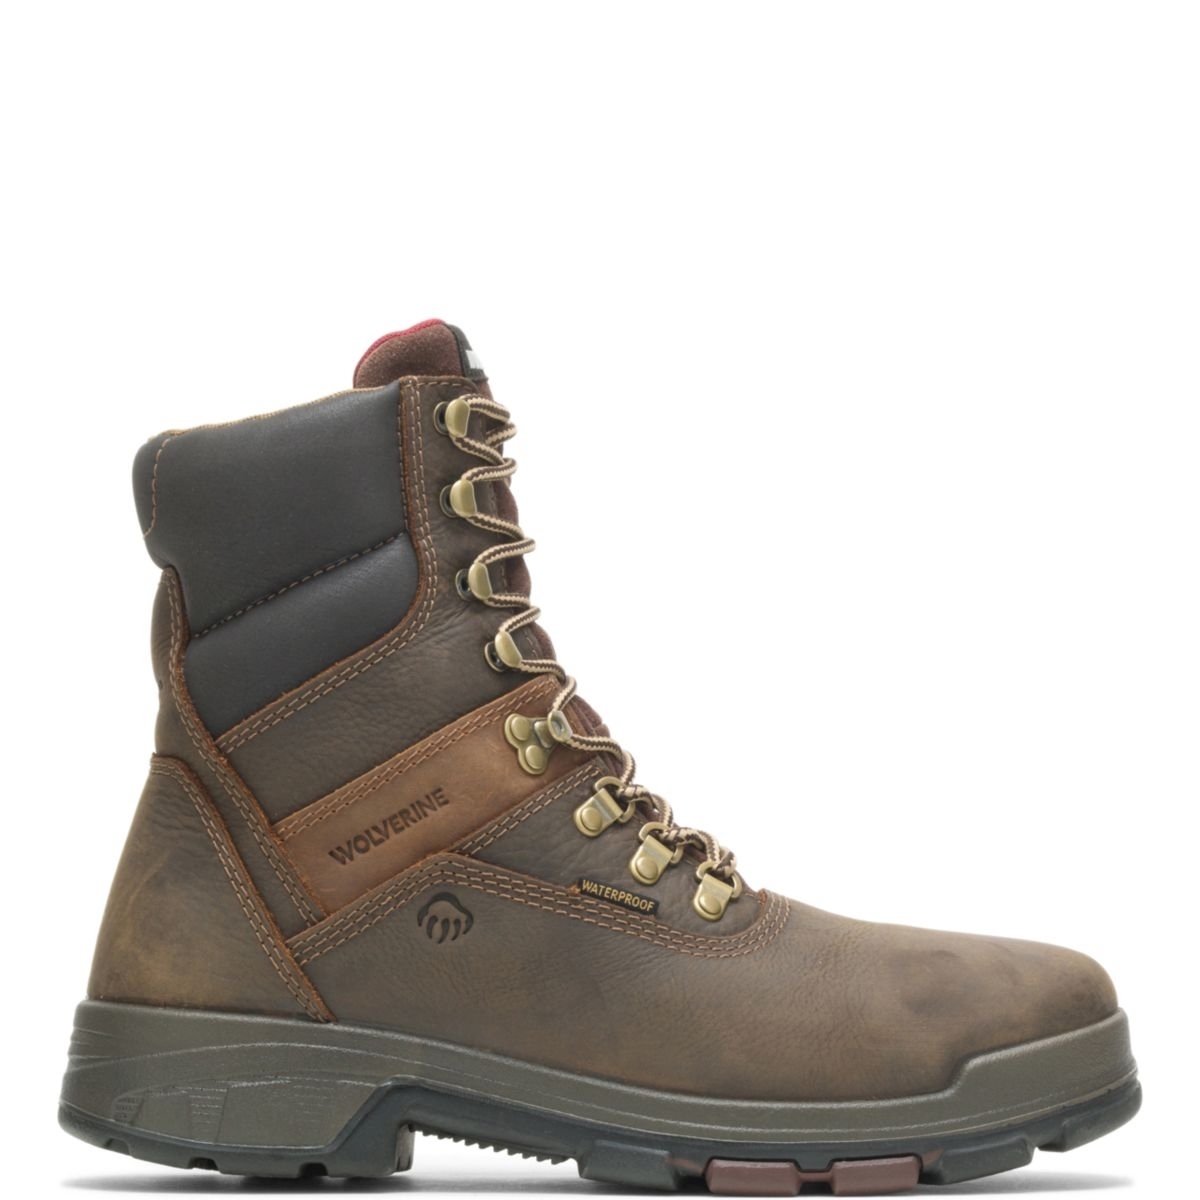 WOLVERINE Men's Cabor EPXÂ® 8 Waterproof Composite Toe Work Boot Dark Brown - W10316 BROWN - BROWN, 8-2E